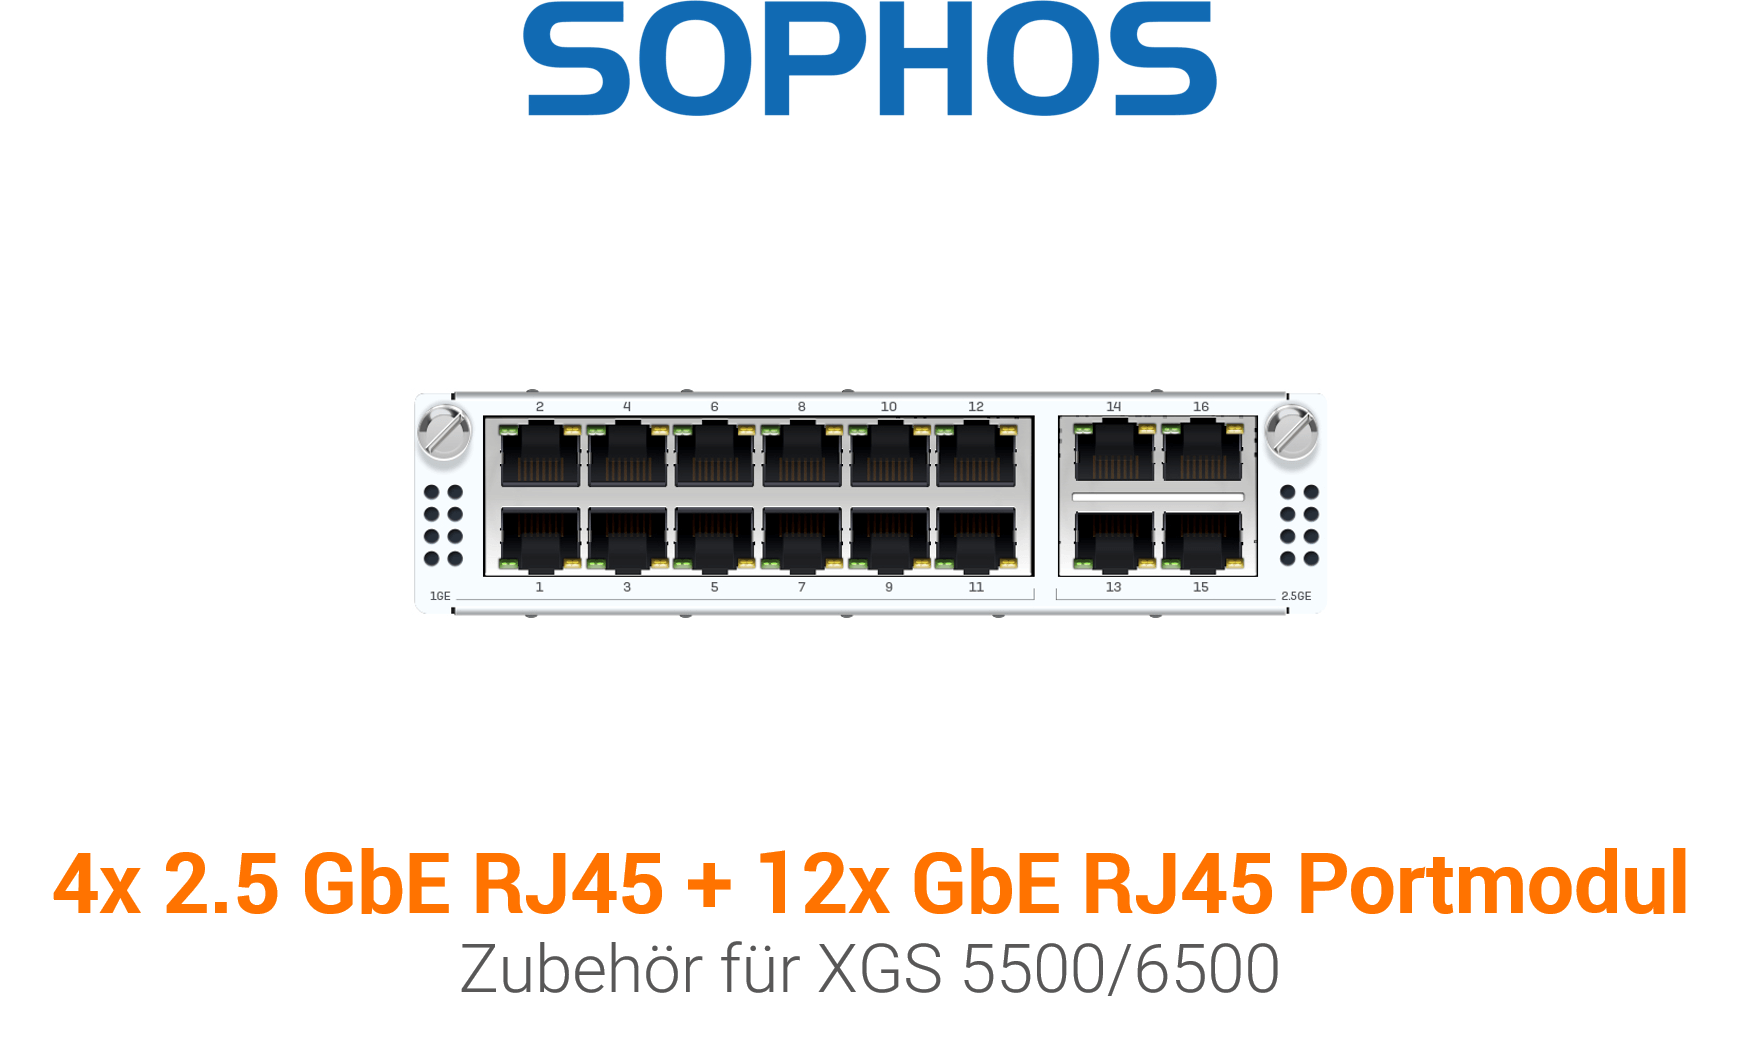 Sophos 4x 2.5 GbE RJ45 + 12x GbE RJ45 High Density Portmodul